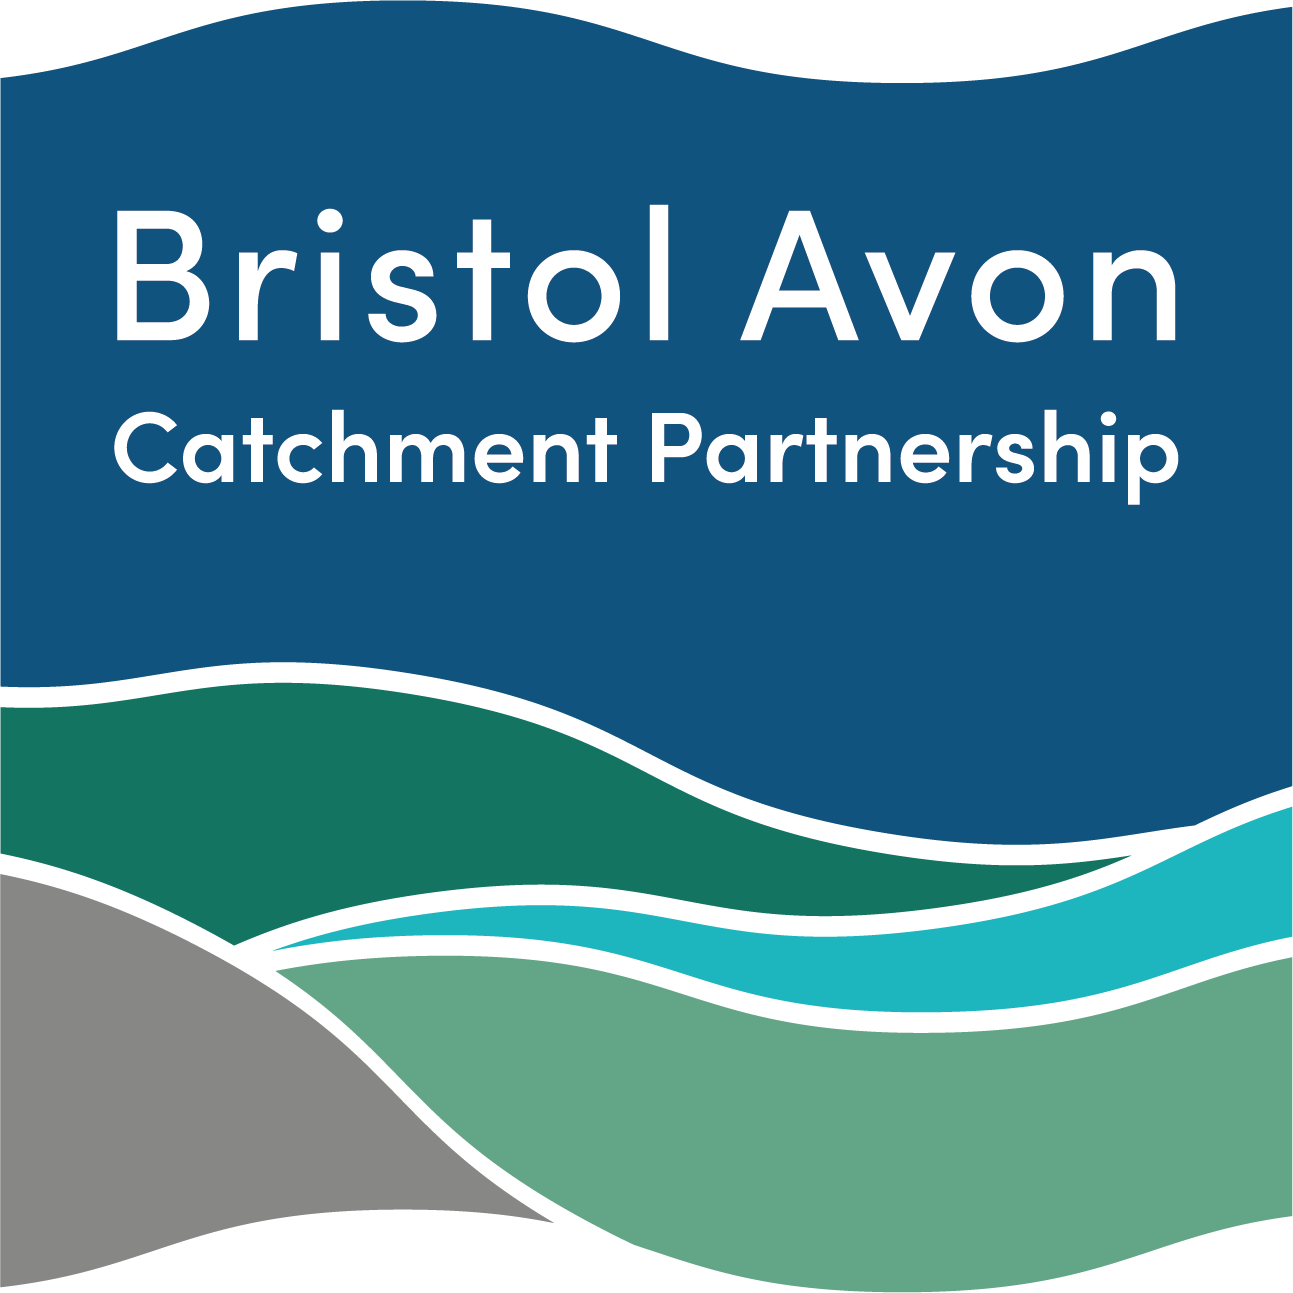 Bristol Avon Catchment Partnership